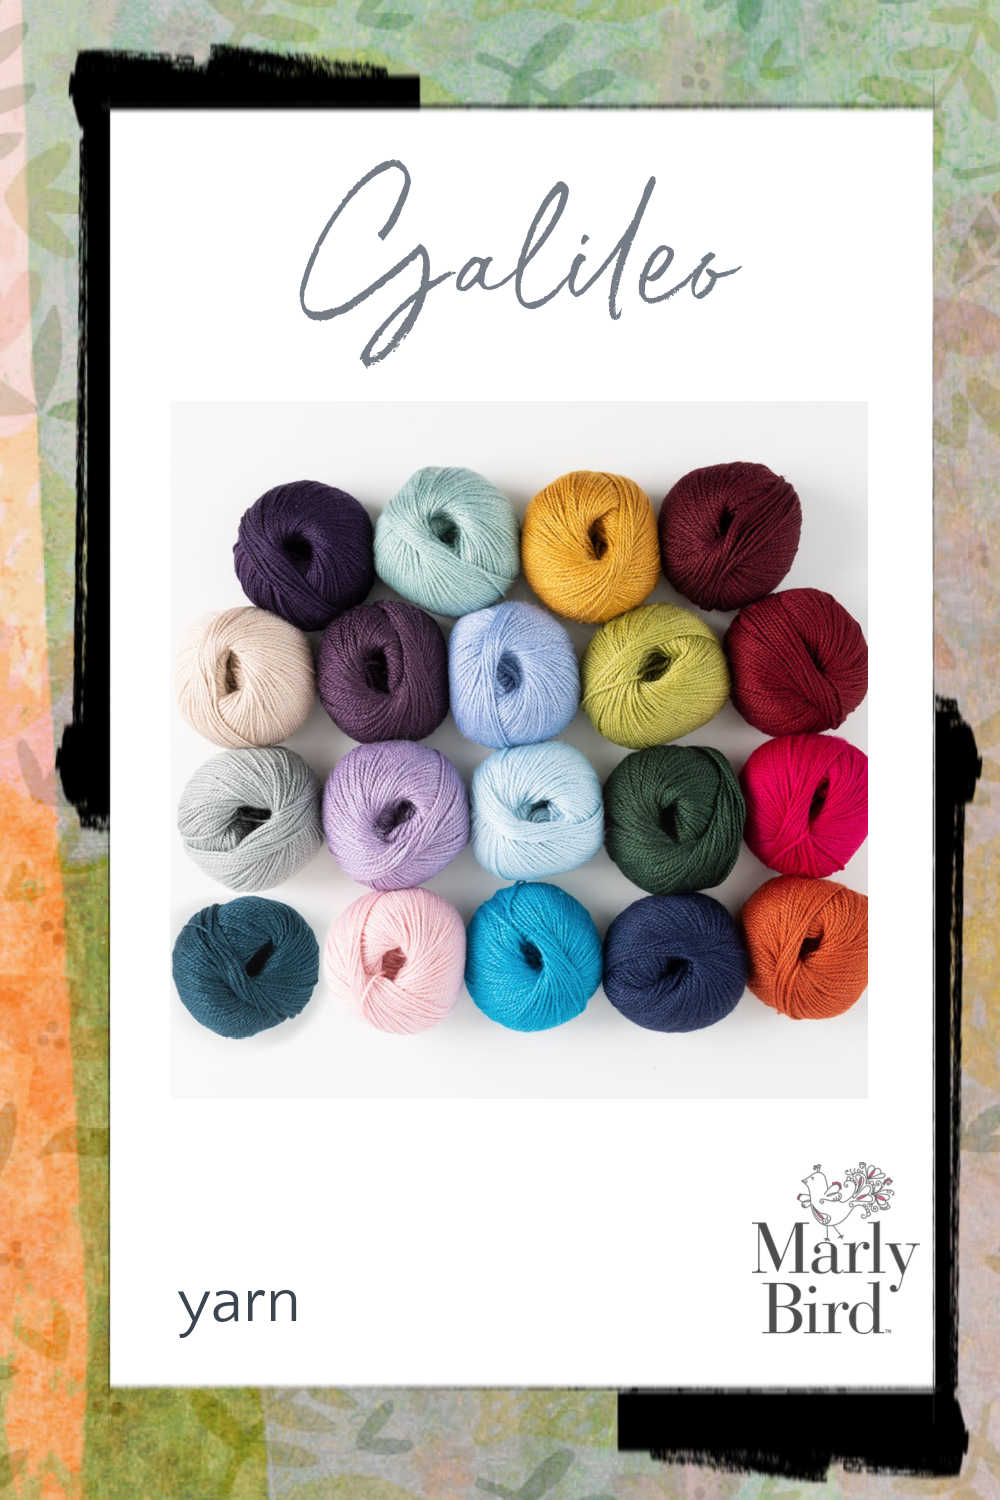 galileo yarn sport weight from knitpicks and wecrochet - Marly Bird